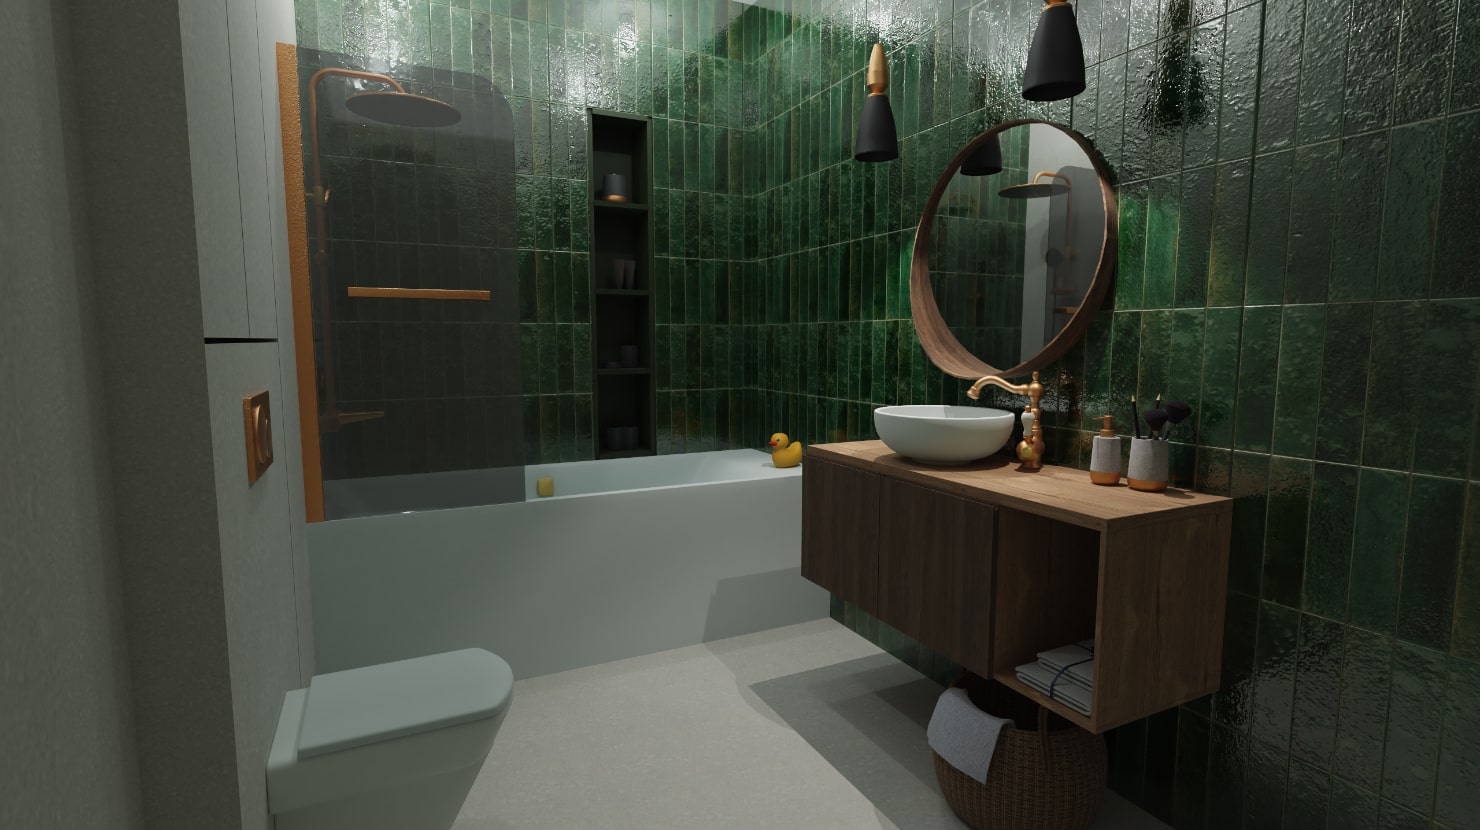 https://www.livehome3d.com/assets/img/articles/bathroom-design-ideas/bathroom-with-green-tile@2x.jpg